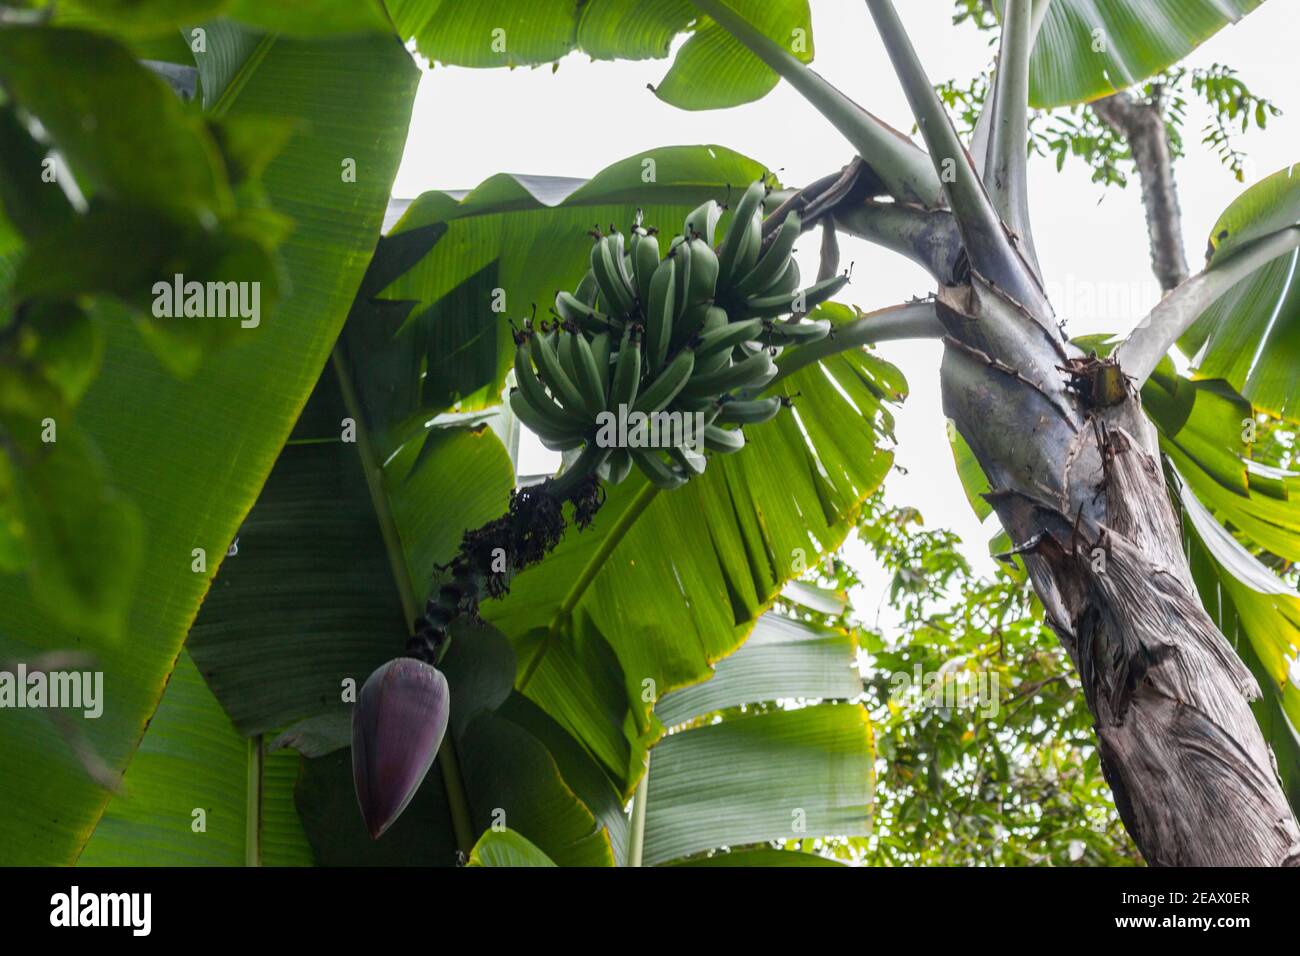 Banana 'tree' showing fruit and inflorescence Musa balbisiana Stock Photo